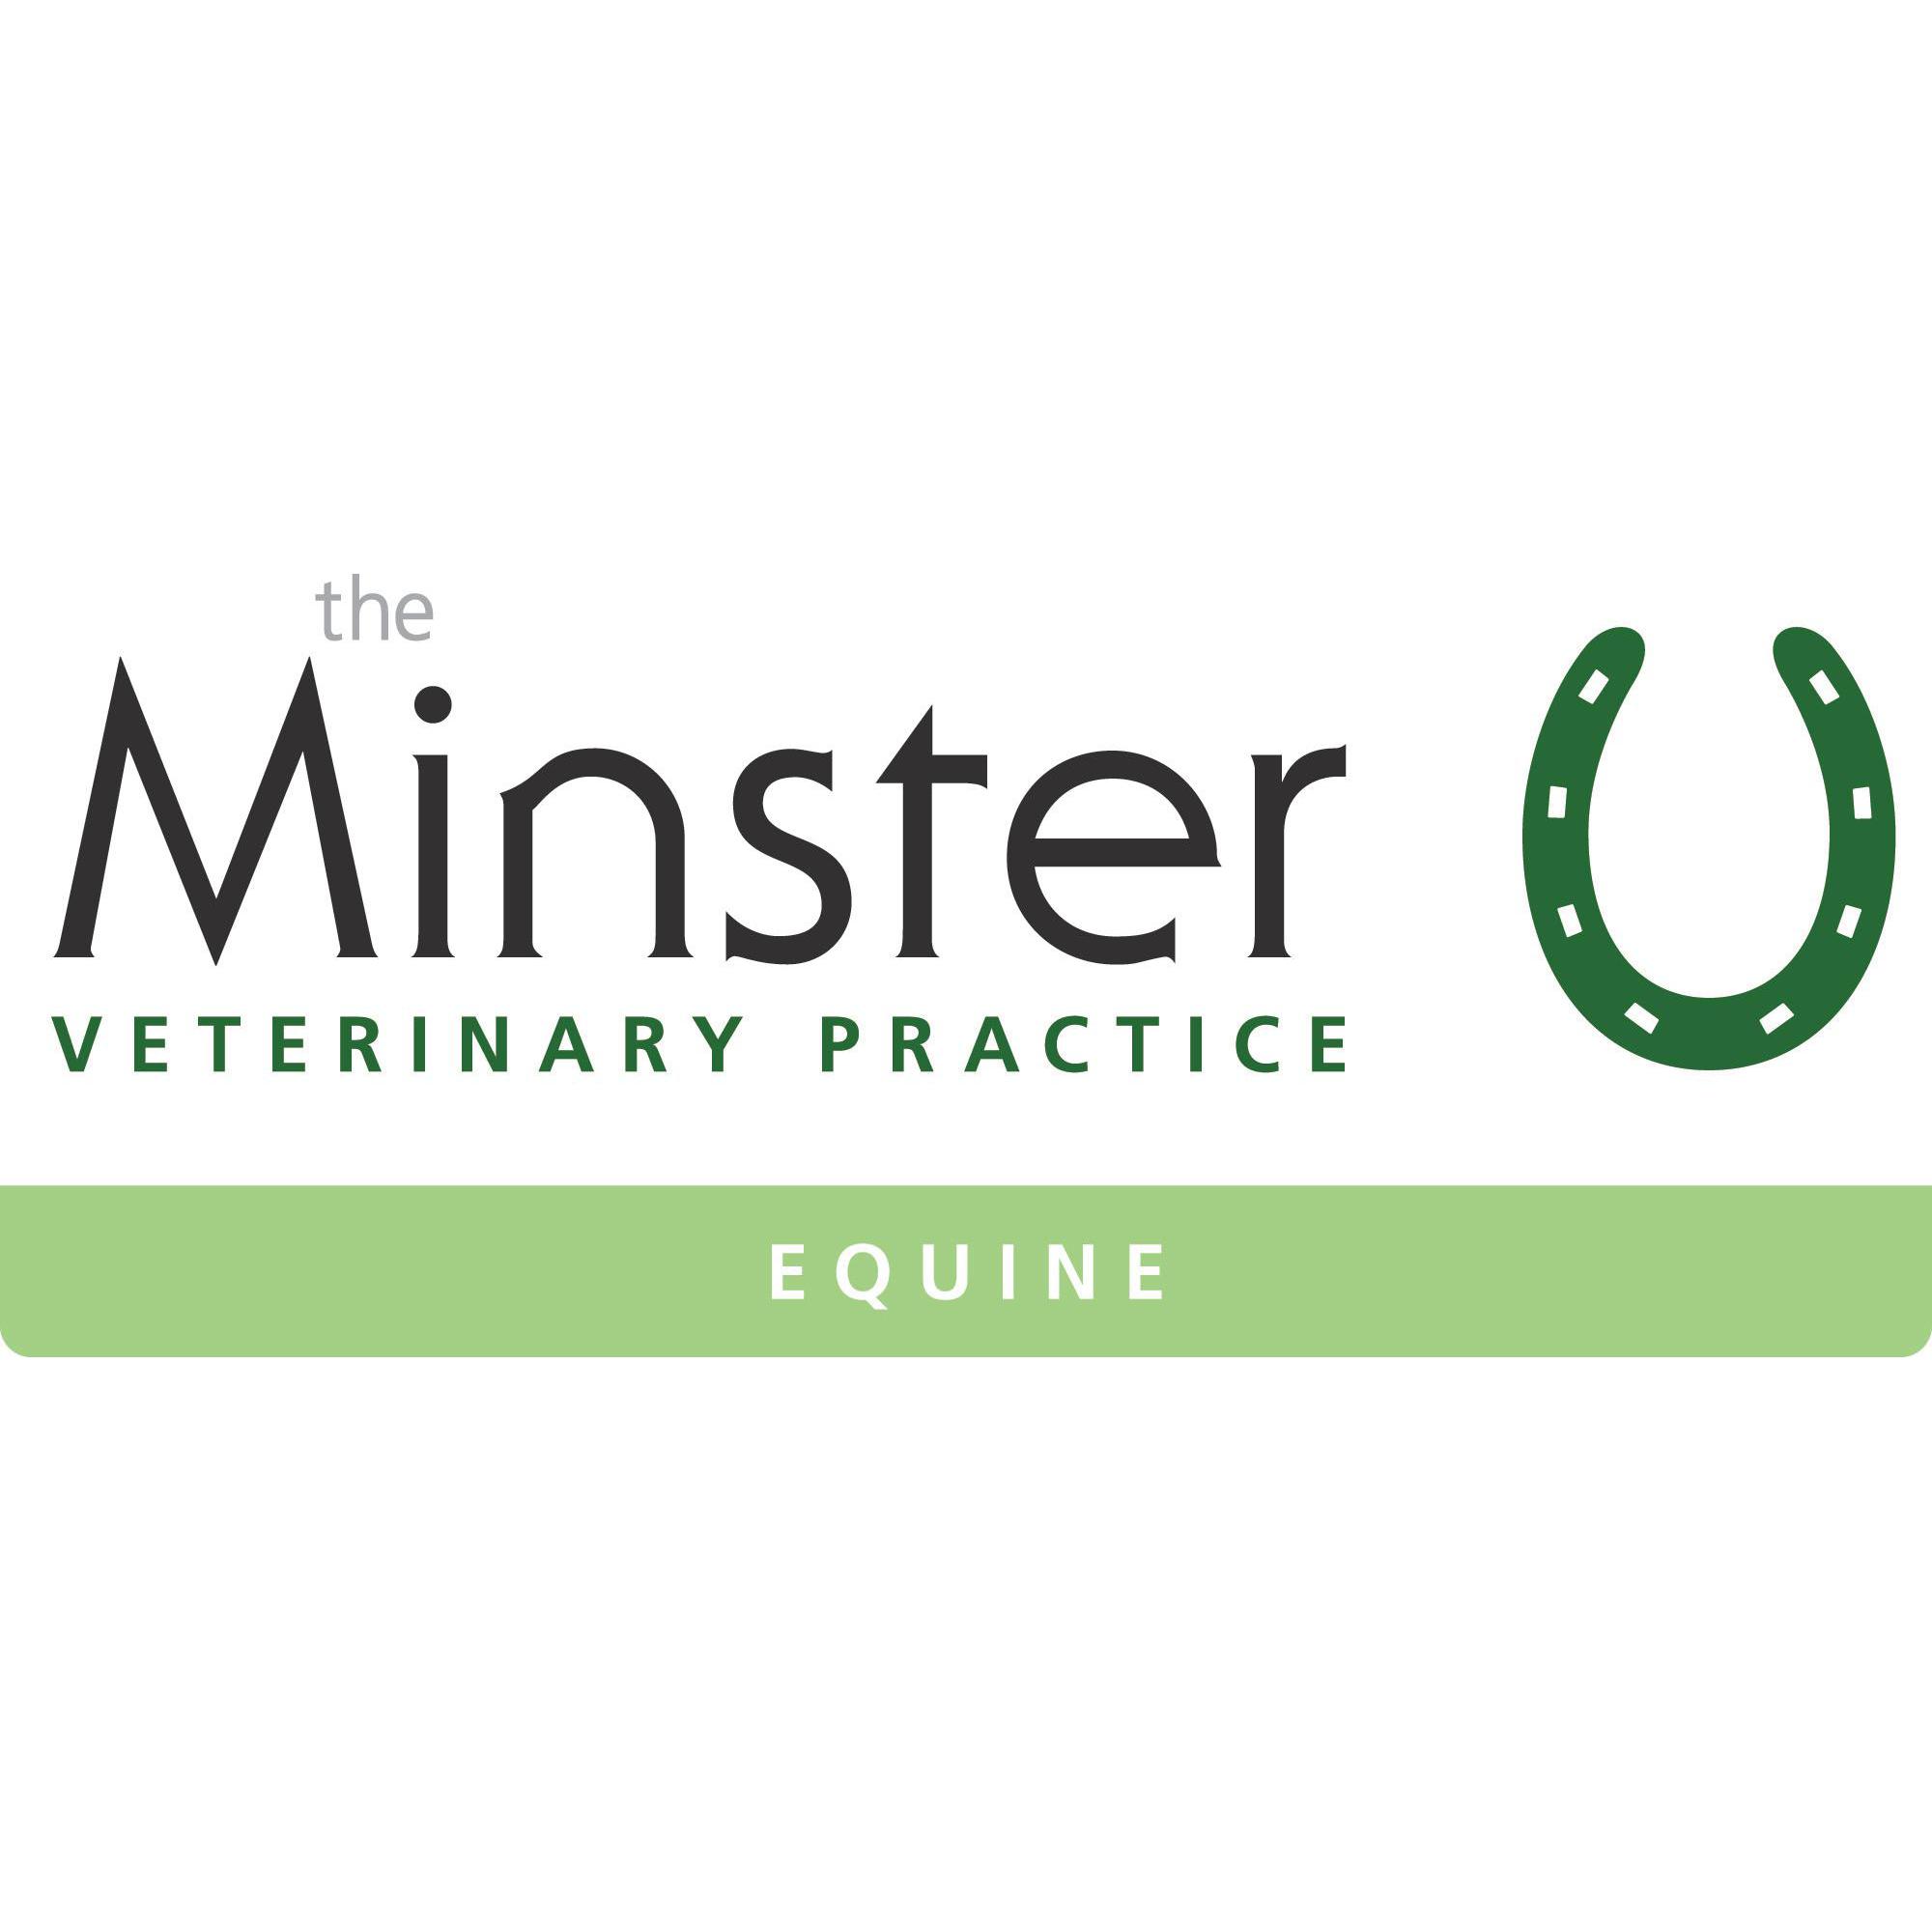 Minster Equine Practice, Malton Logo